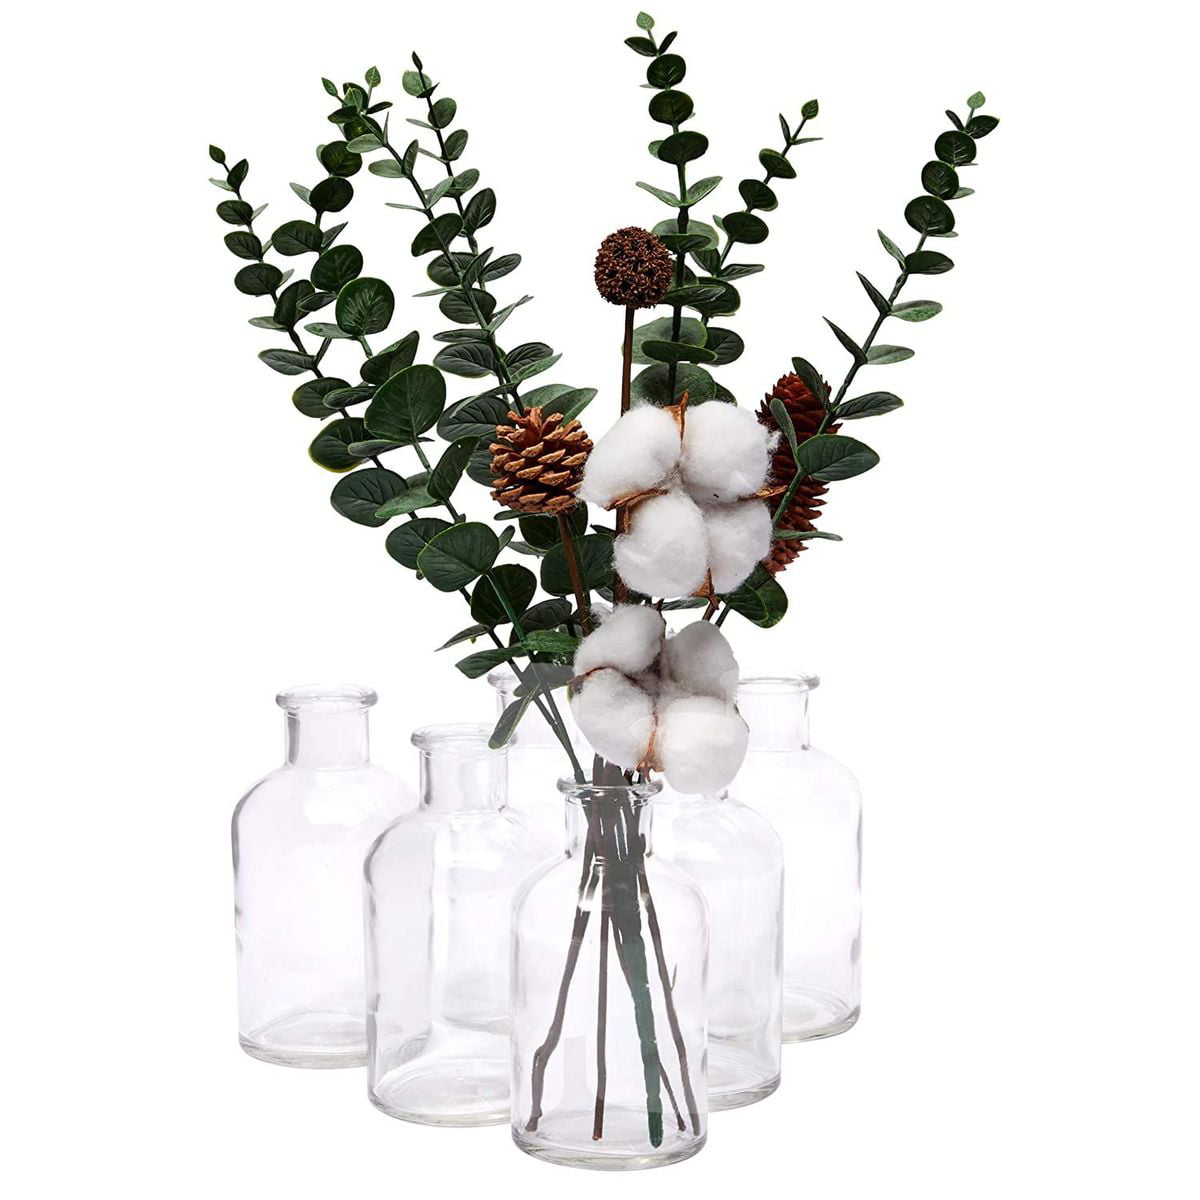 Glassware Amber Glass Vintage Decorative Bottle Bud Flower Vase Home Decor Table Decor Bud Vase Vanity Decor Movie Prop Decor